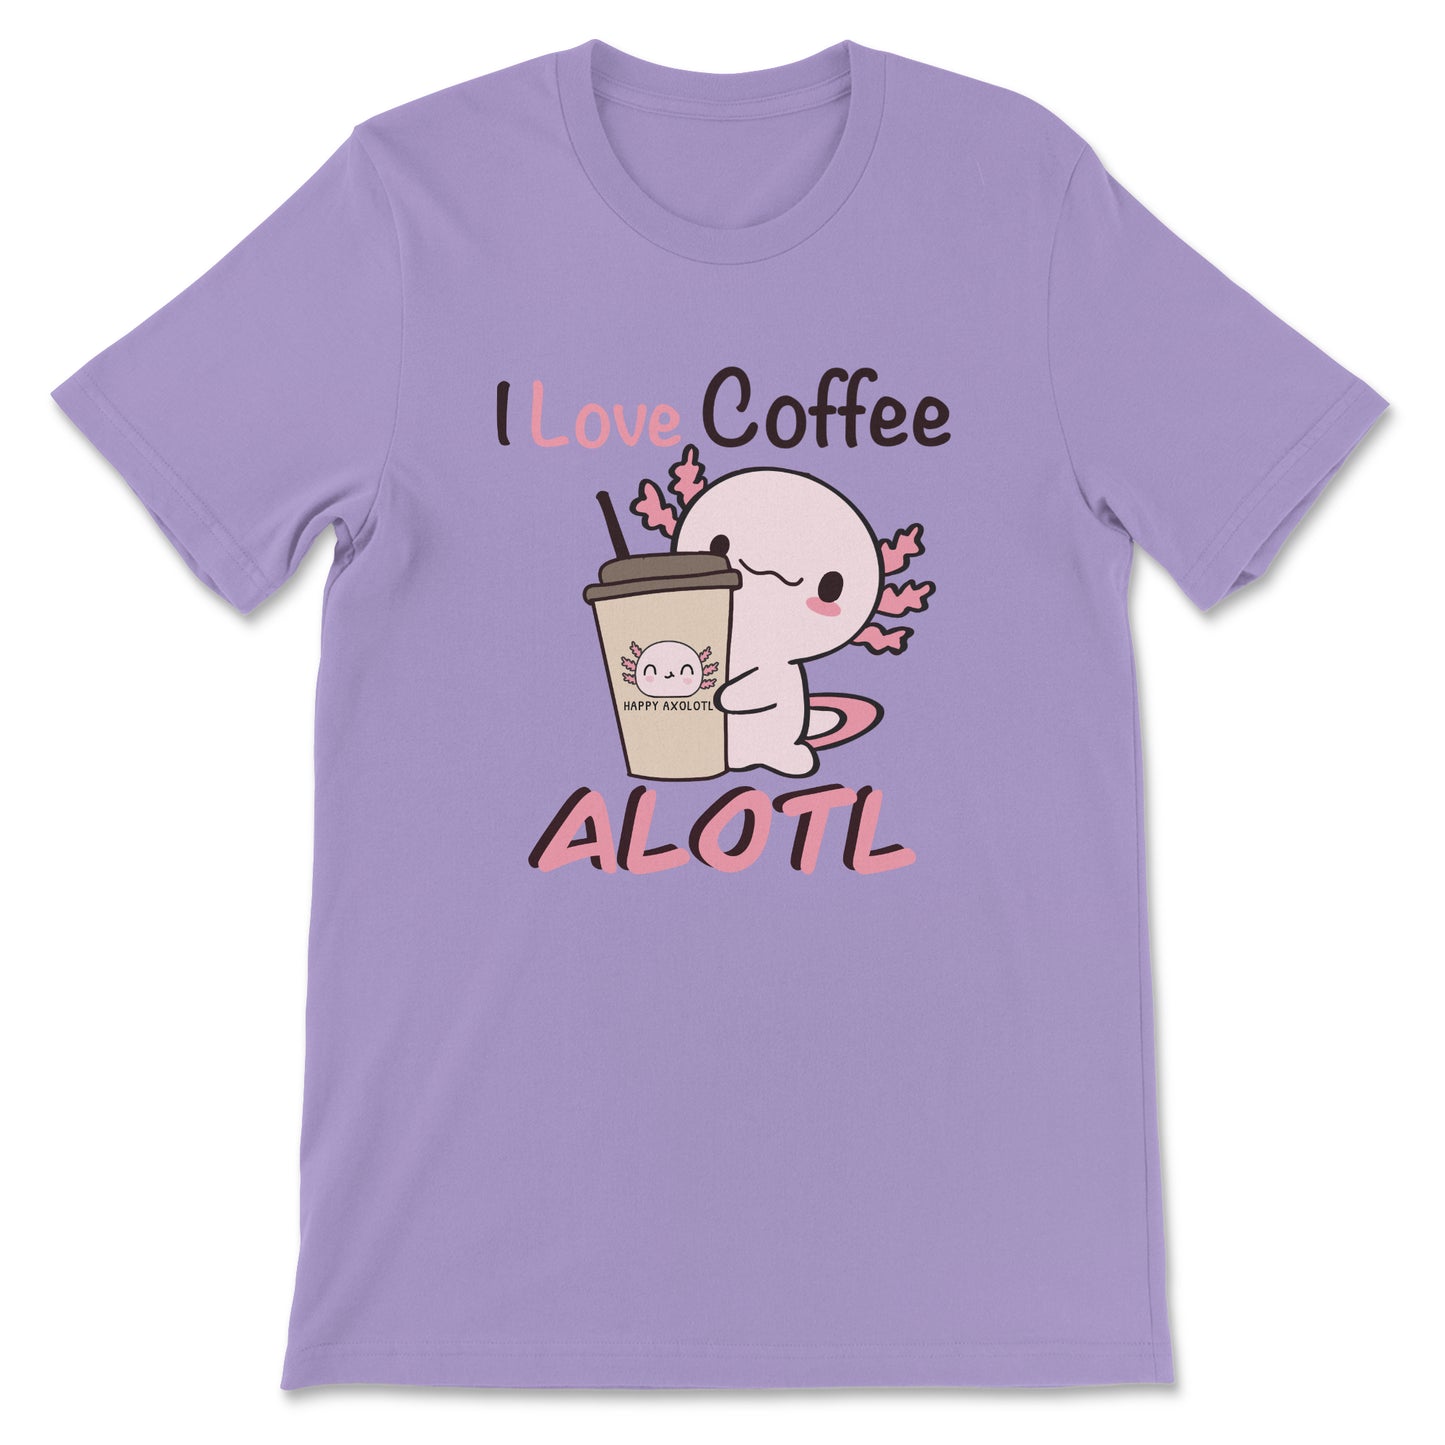 I Love Coffee Alotl T-Shirt